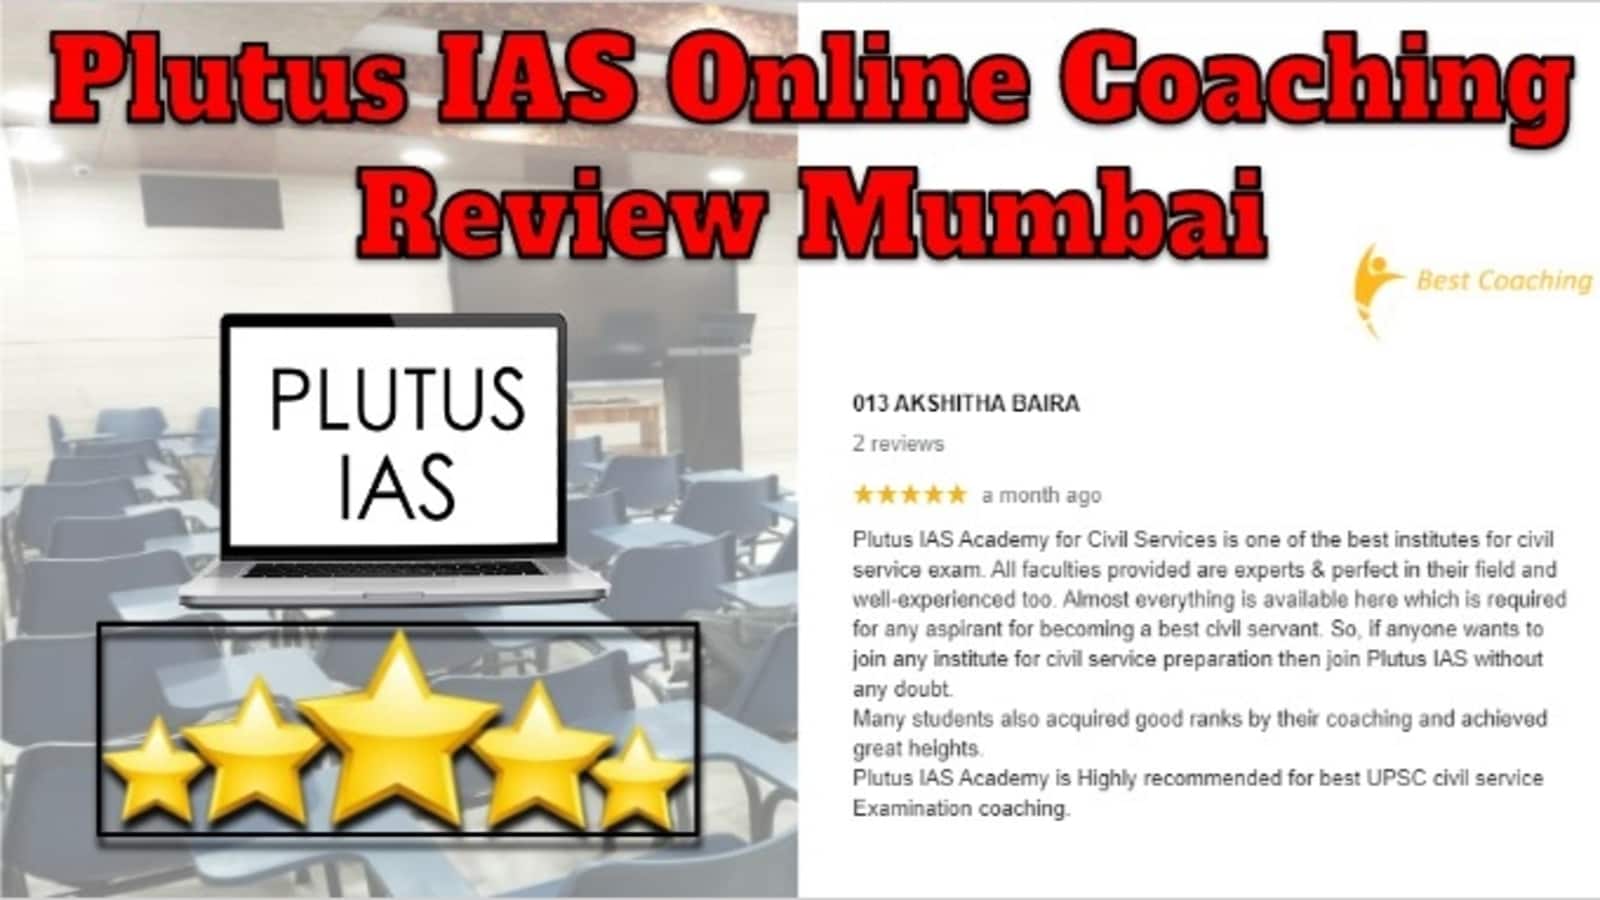 Plutus IAS Online Coaching Review Mumbai